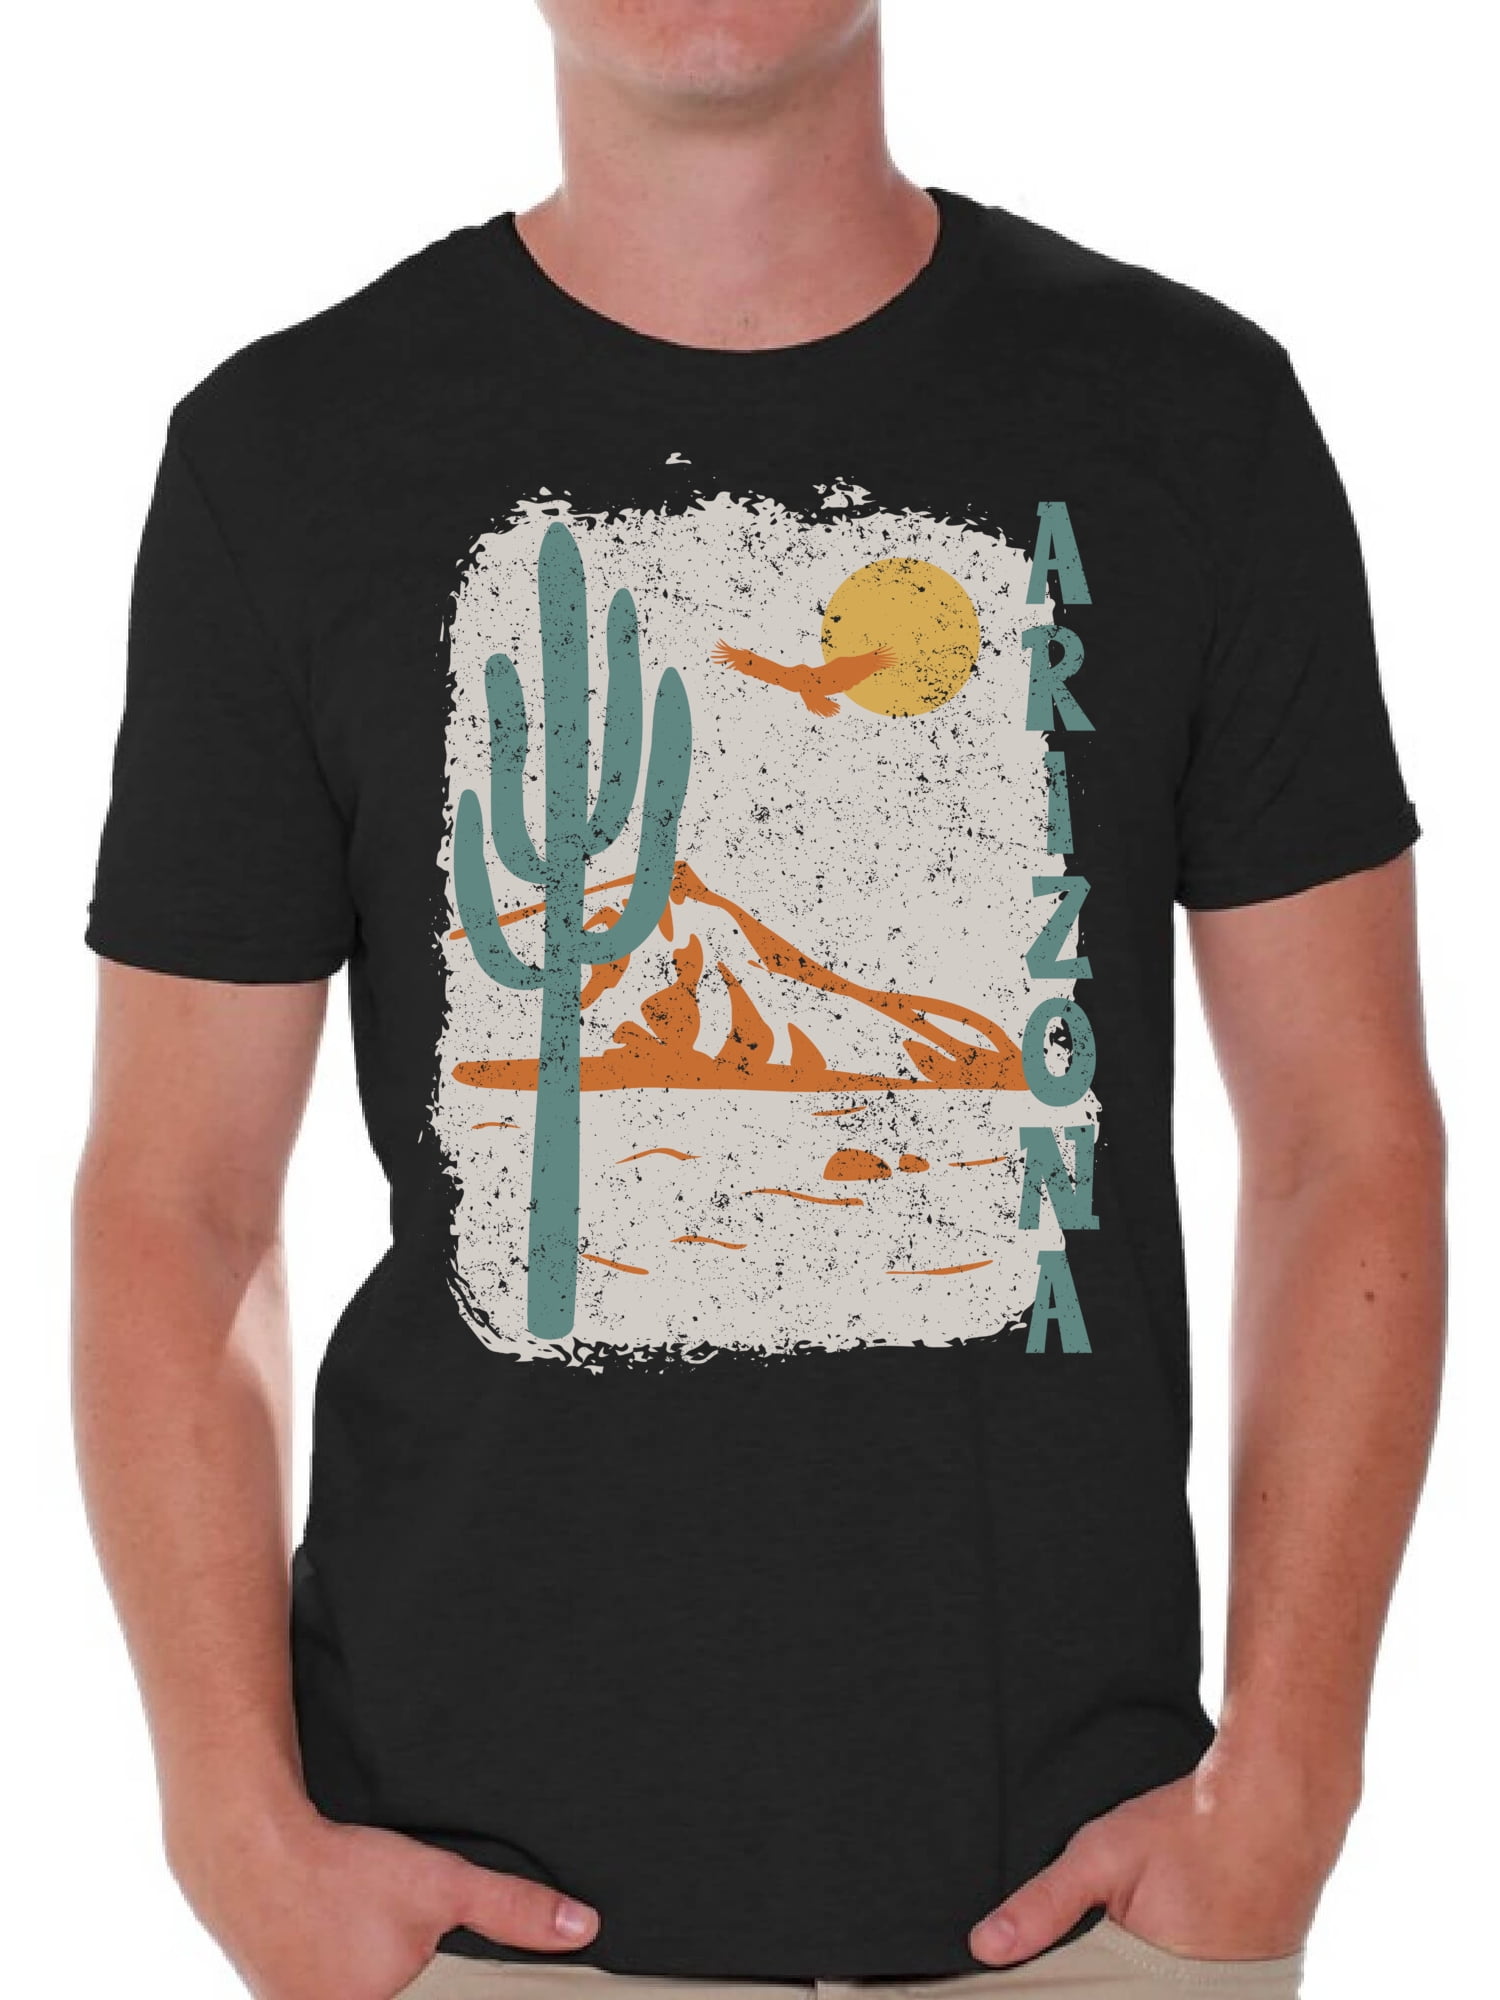 Arizona T-shirts for Men - AZ State USA Gift - Graphic Novelty Souvenir